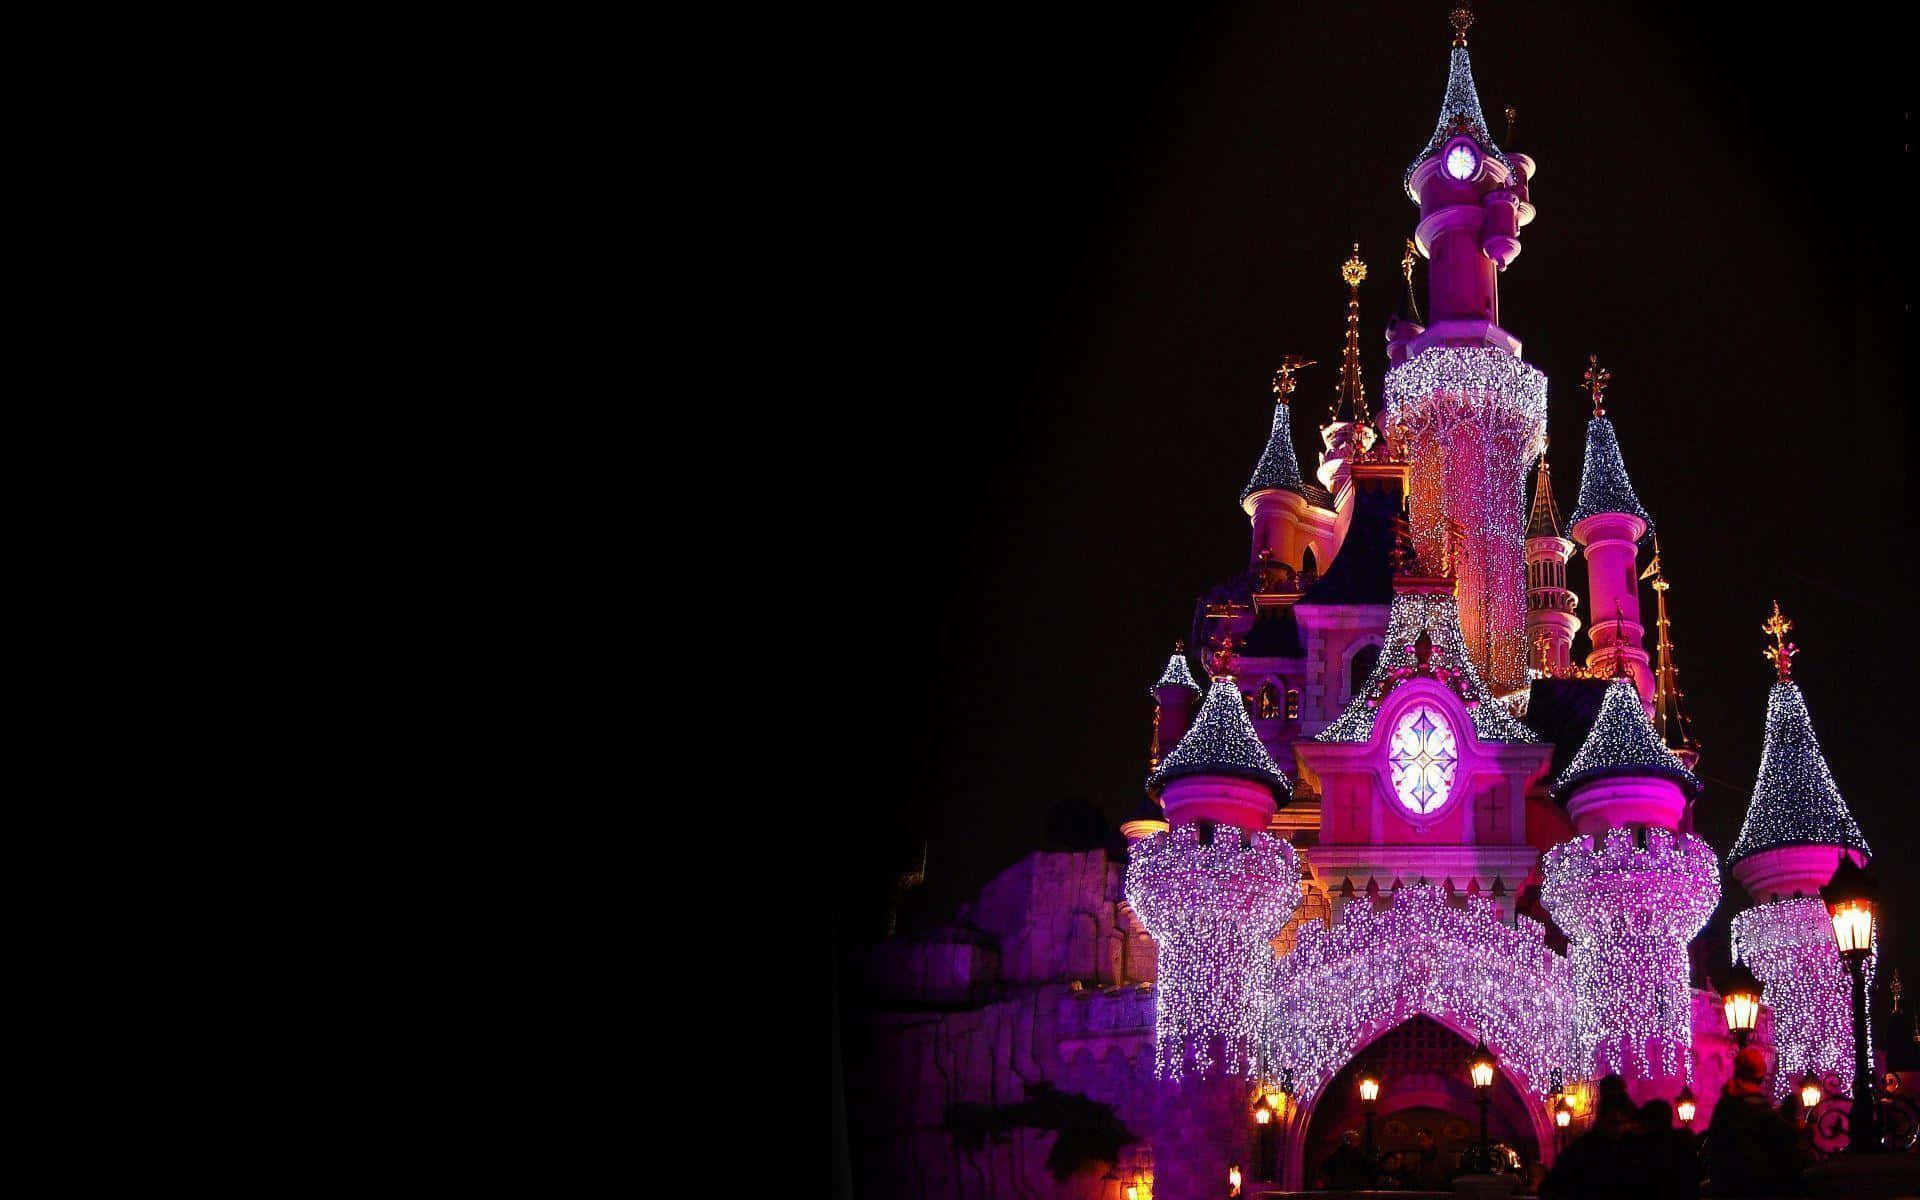 Mejorfondo De Pantalla De Disney: Castillo De Disney De Color Púrpura